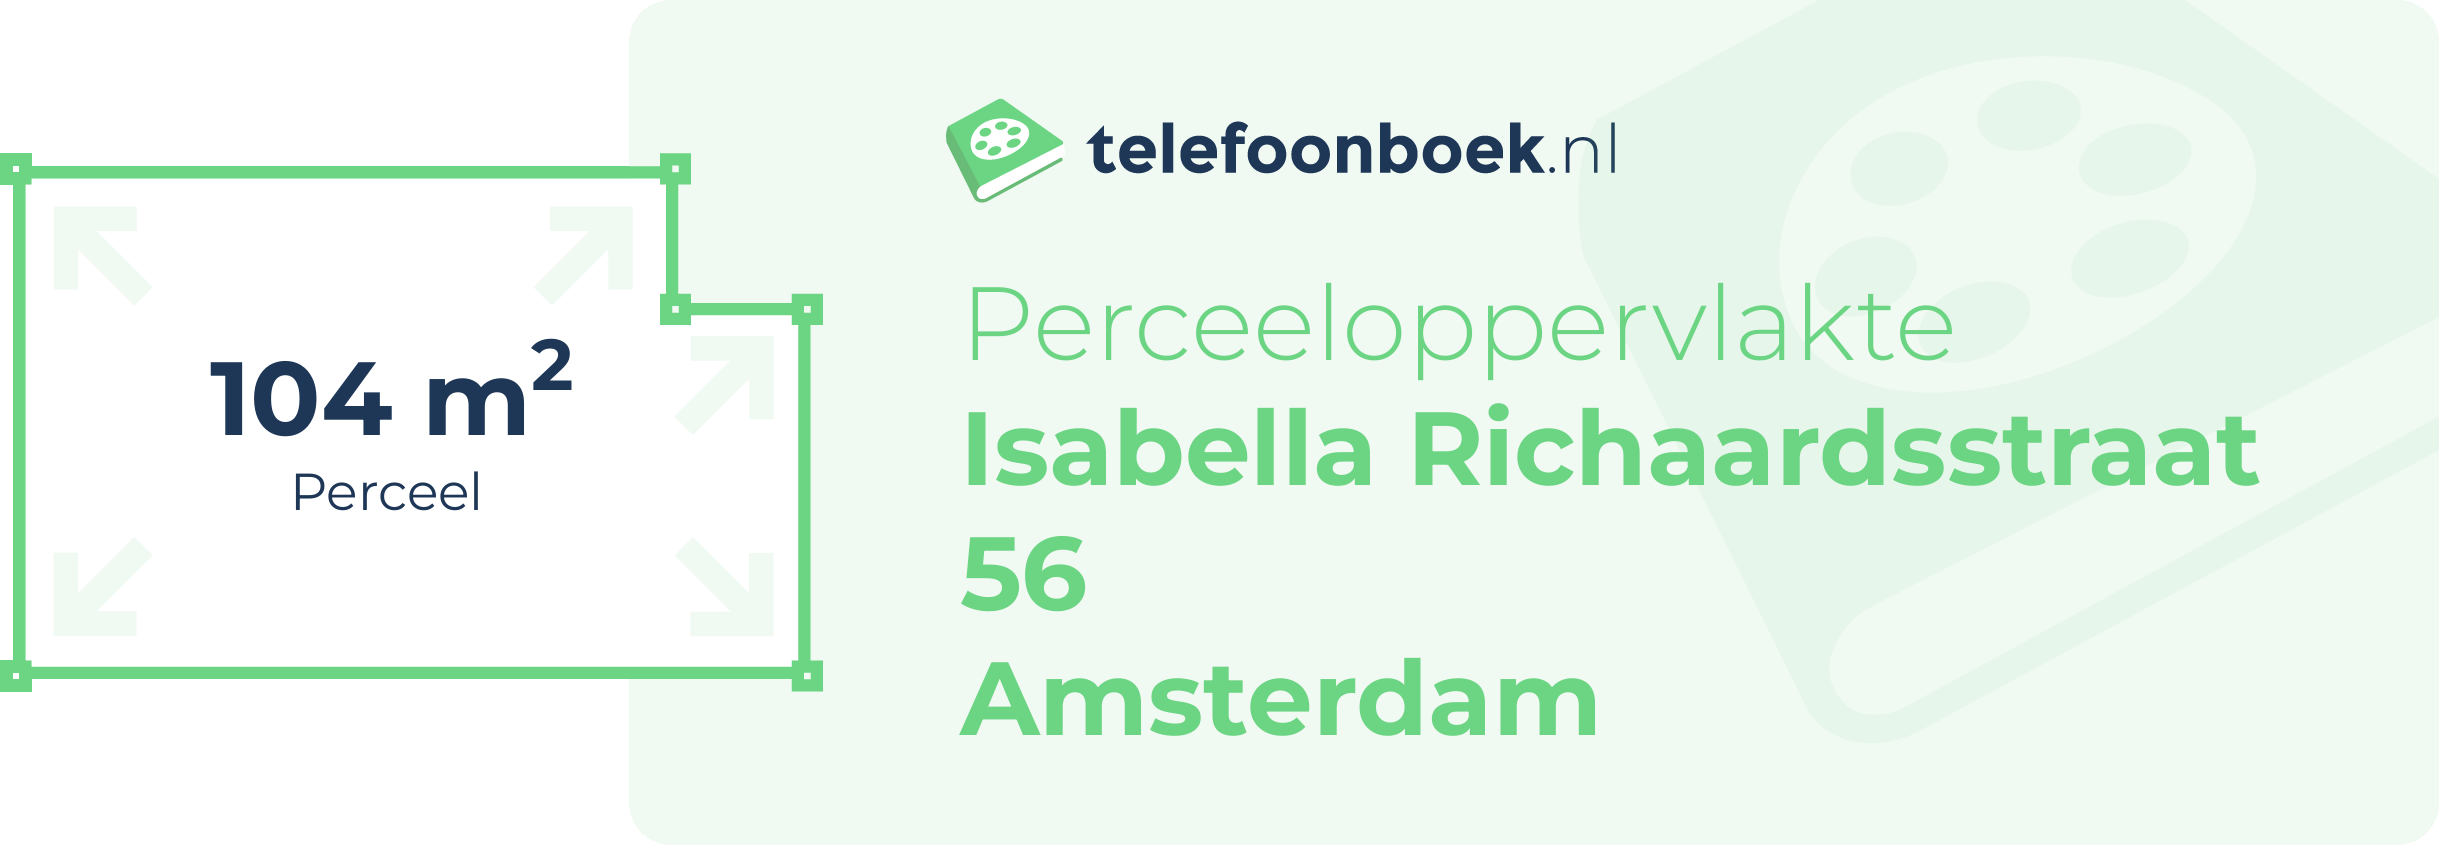 Perceeloppervlakte Isabella Richaardsstraat 56 Amsterdam